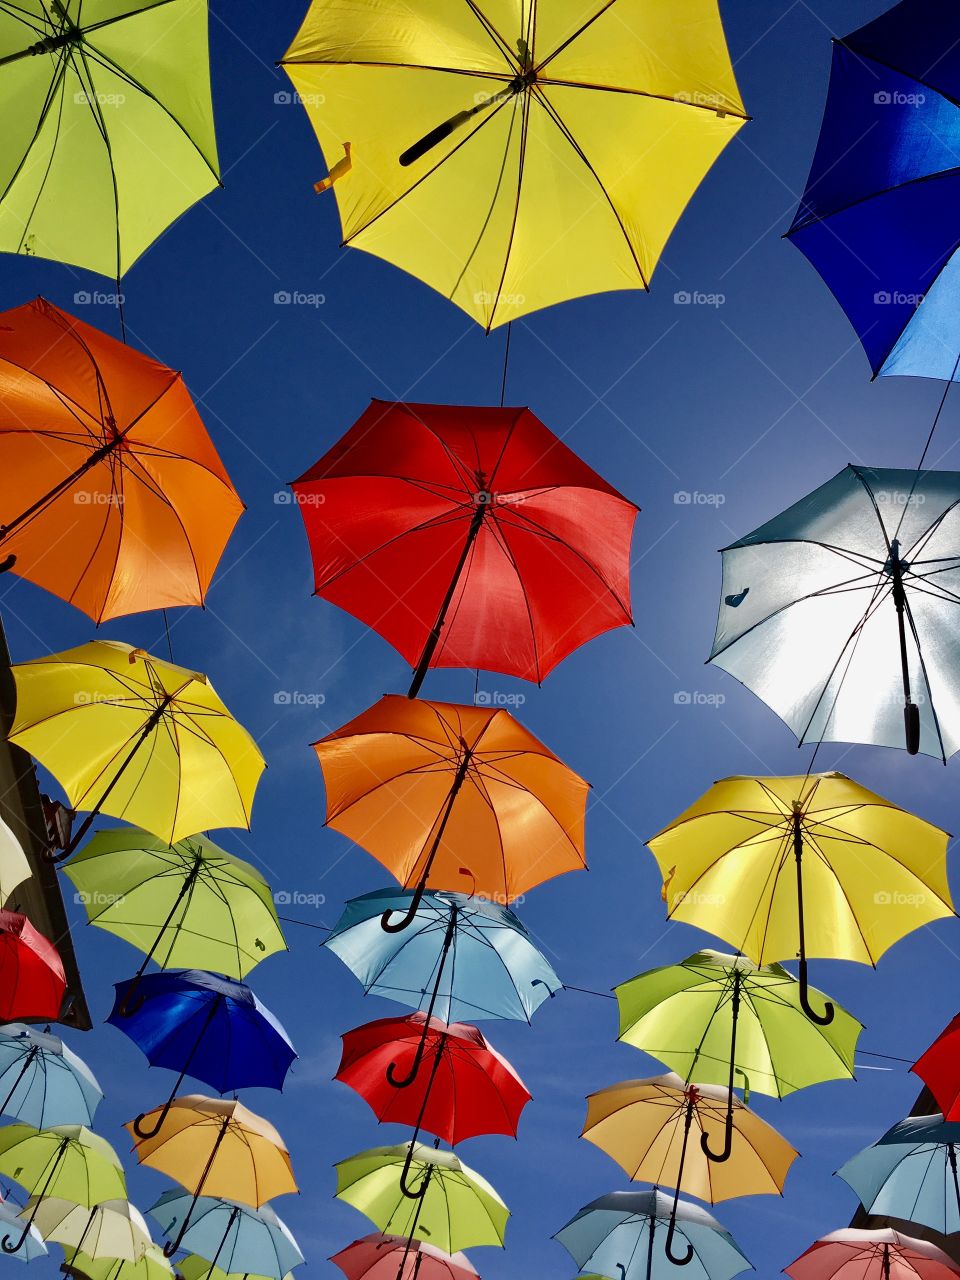 artistic representation with colored umbrellas in Novigrad, Croatia